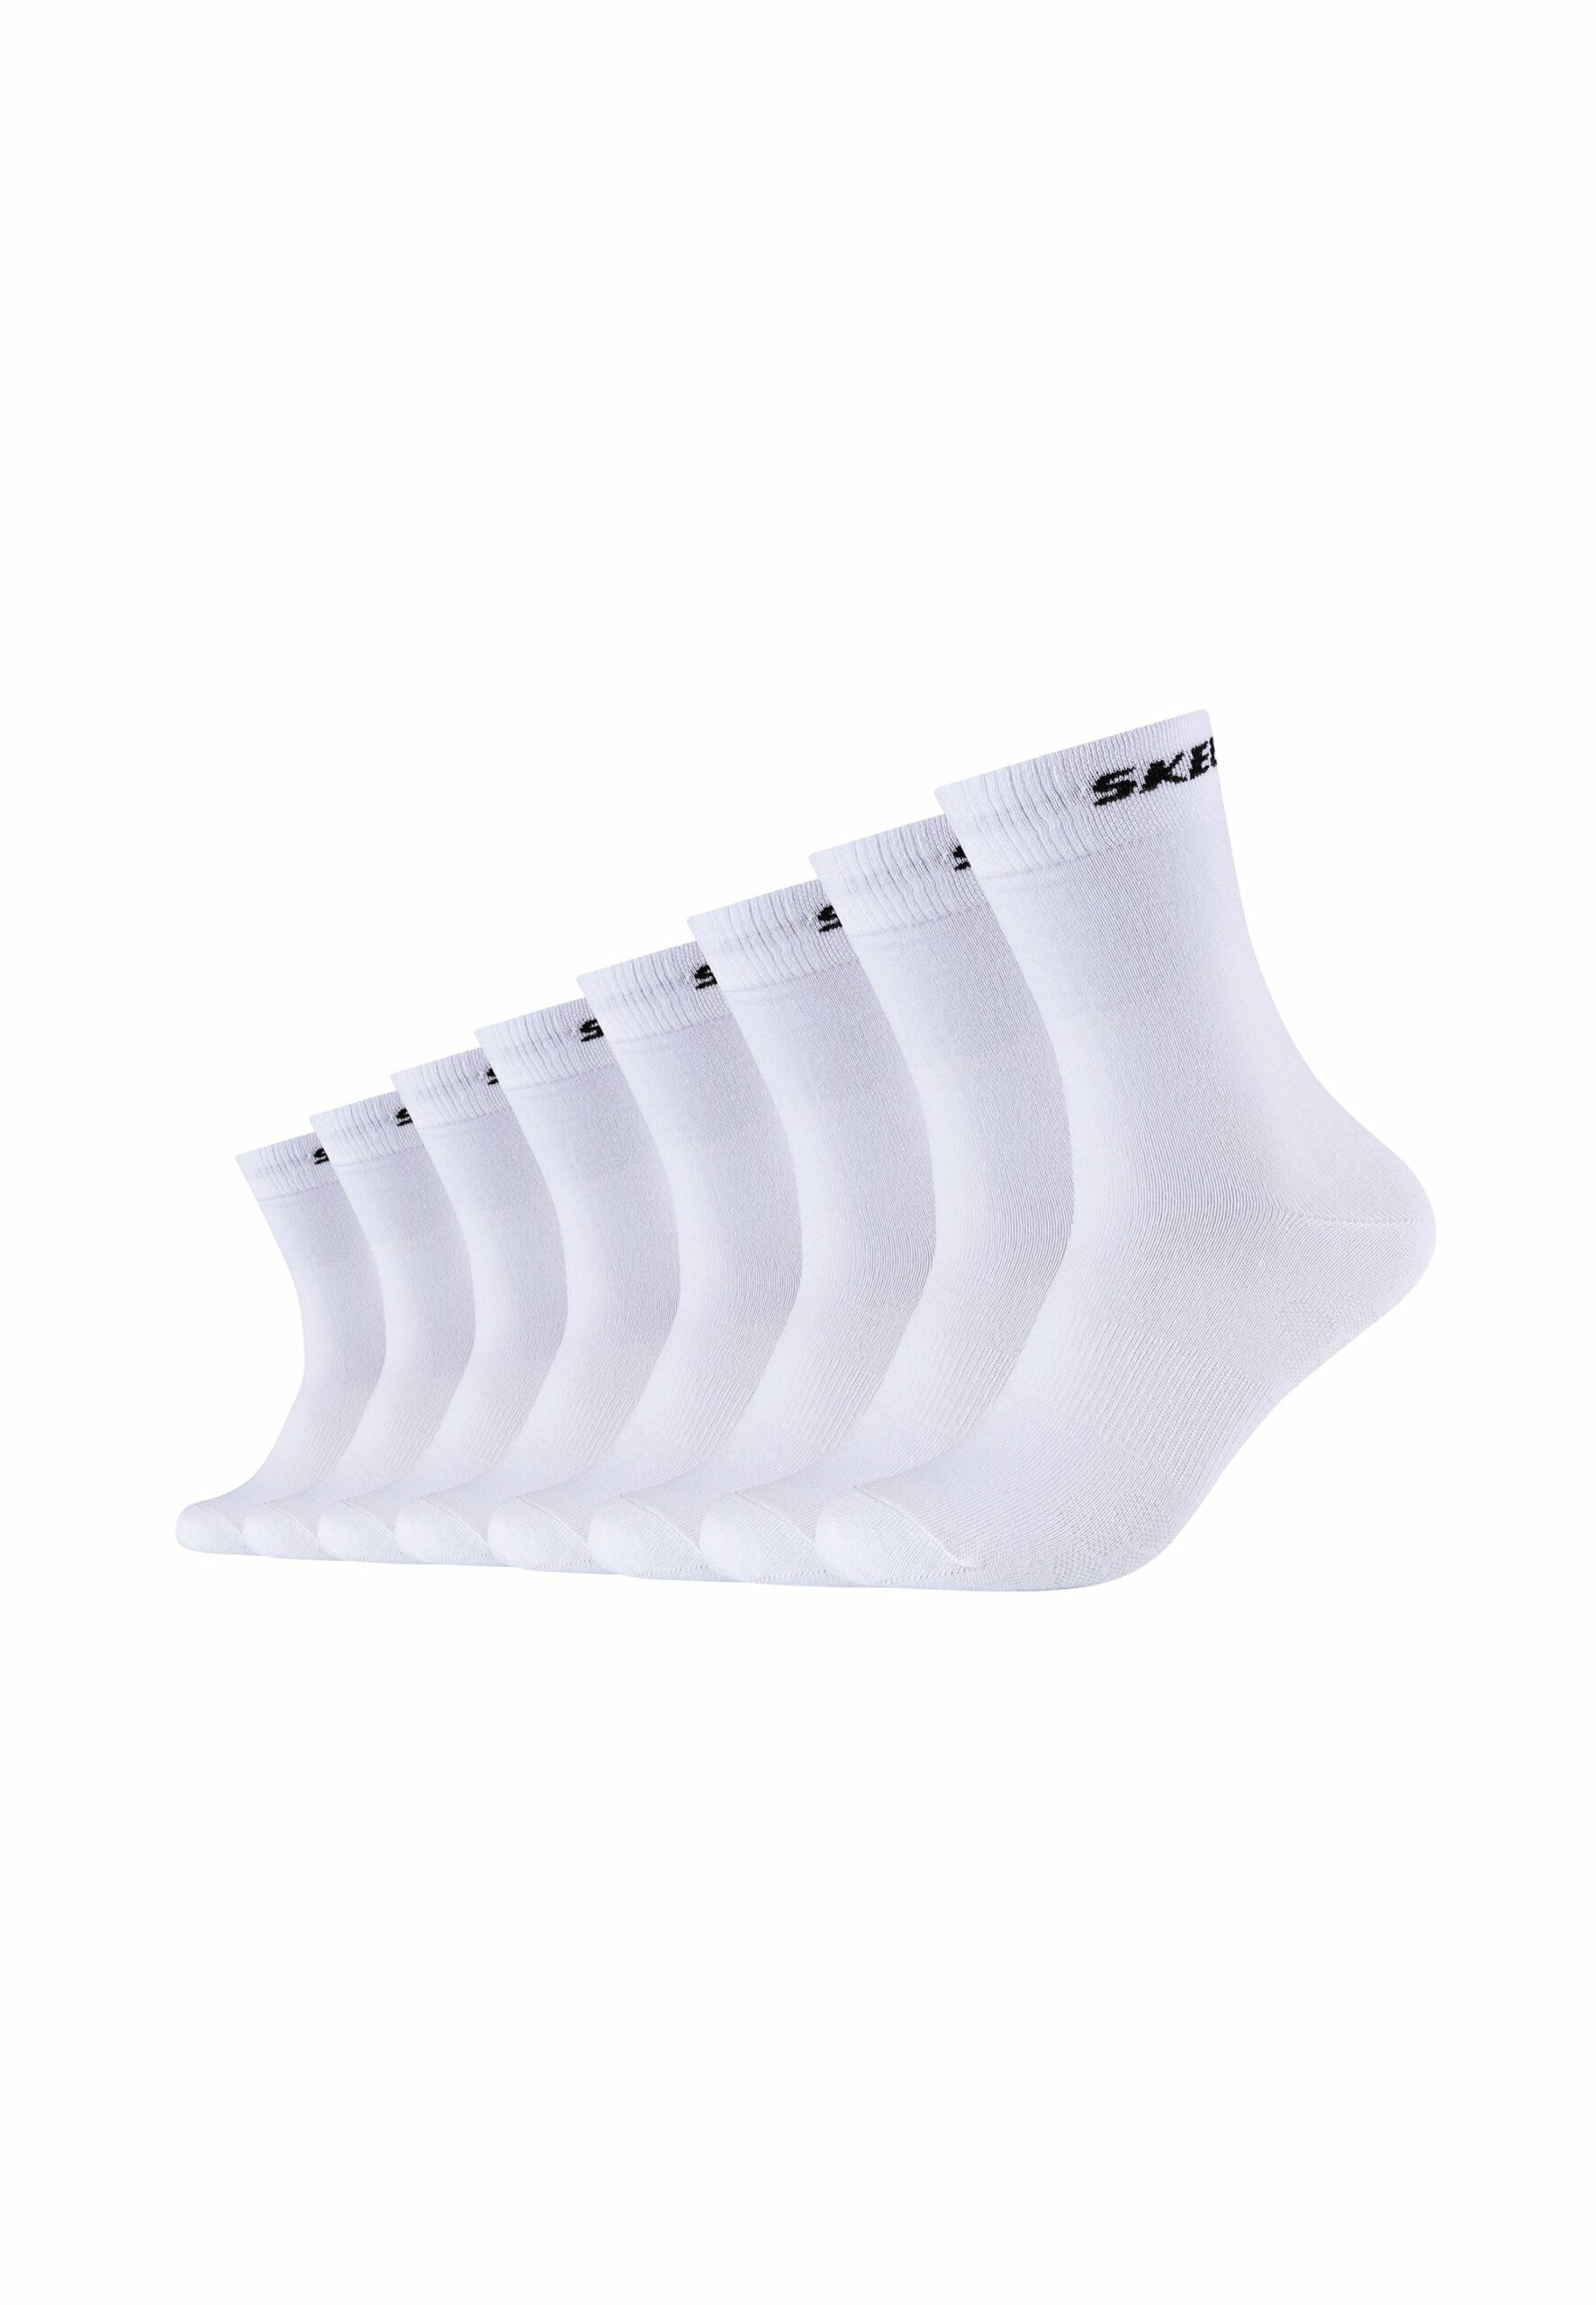 Skechers Socken Mesh Ventilation bei white organic kaufen 8er Pack